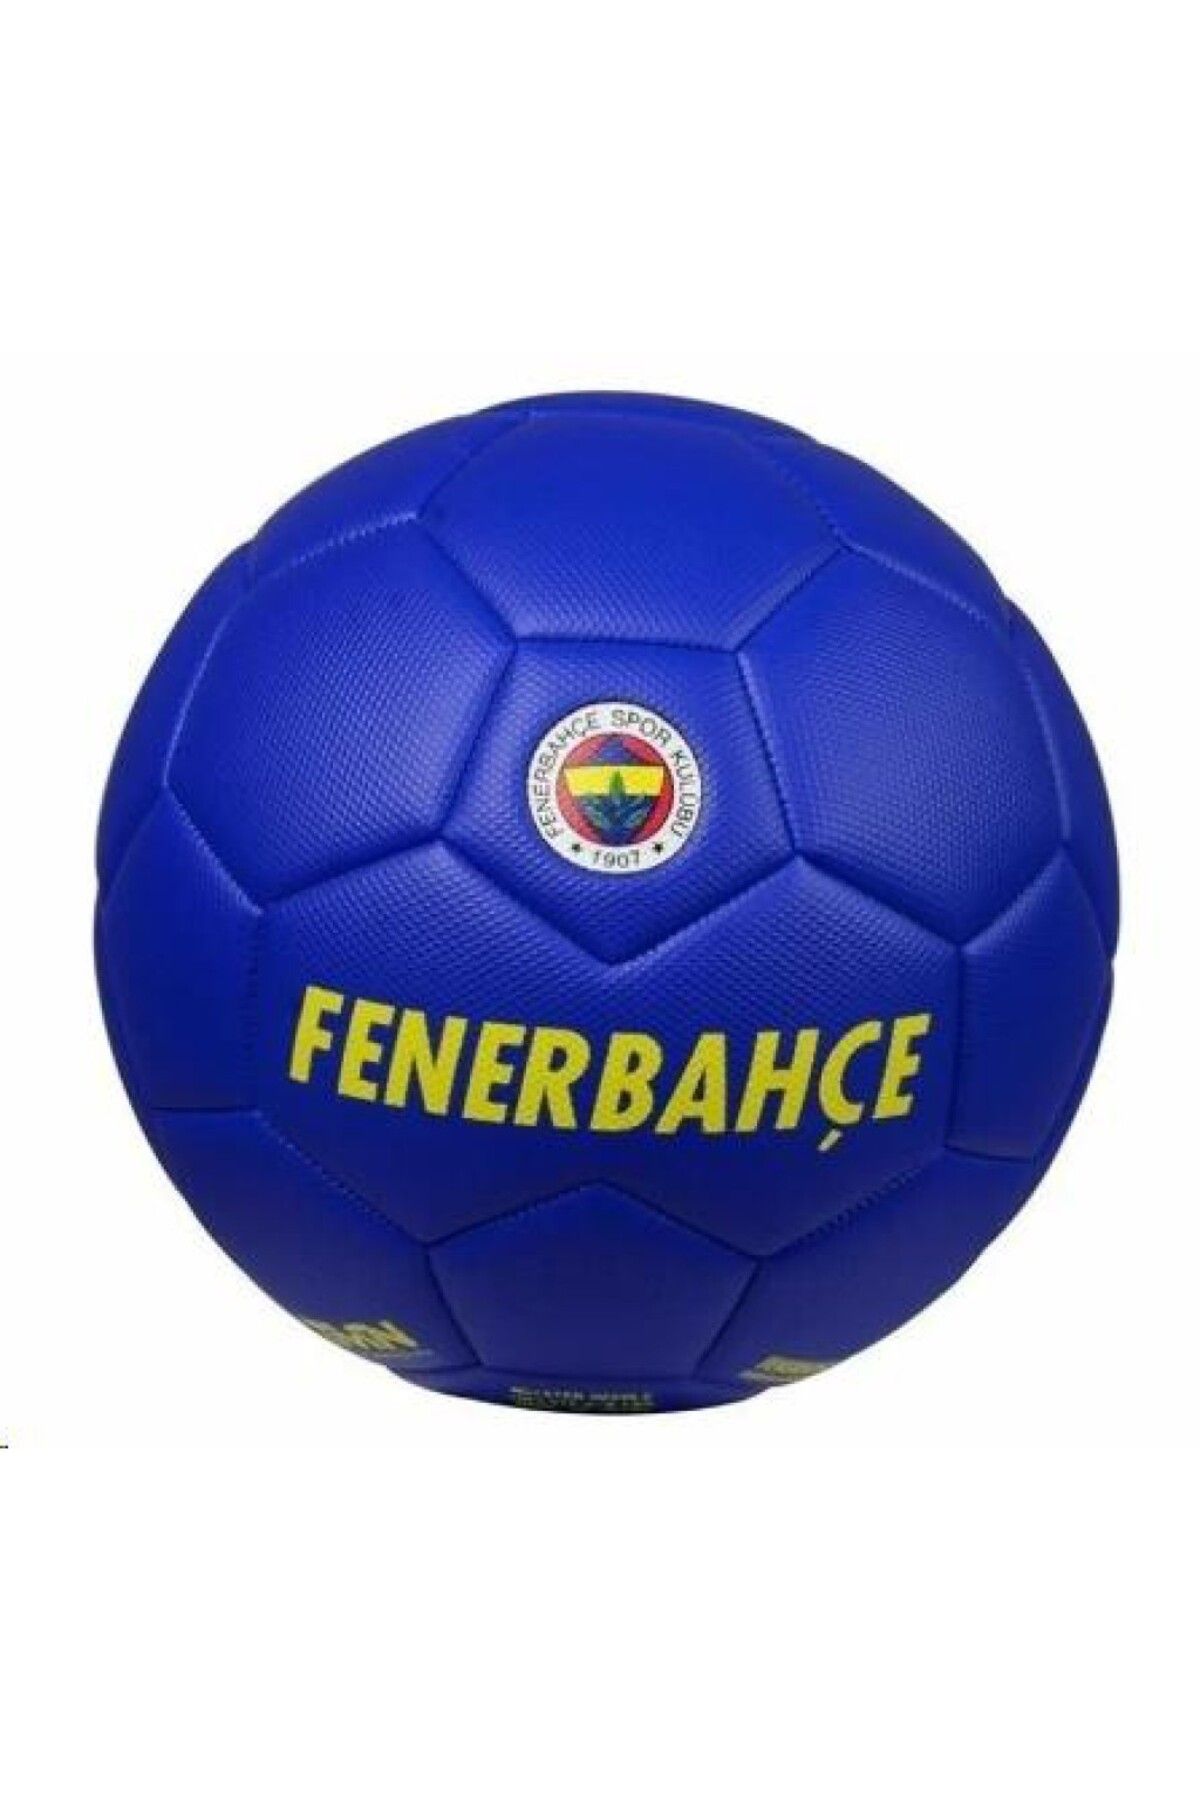 Fenerbahçe Premıum Futbol Topu No:5 Lacivert